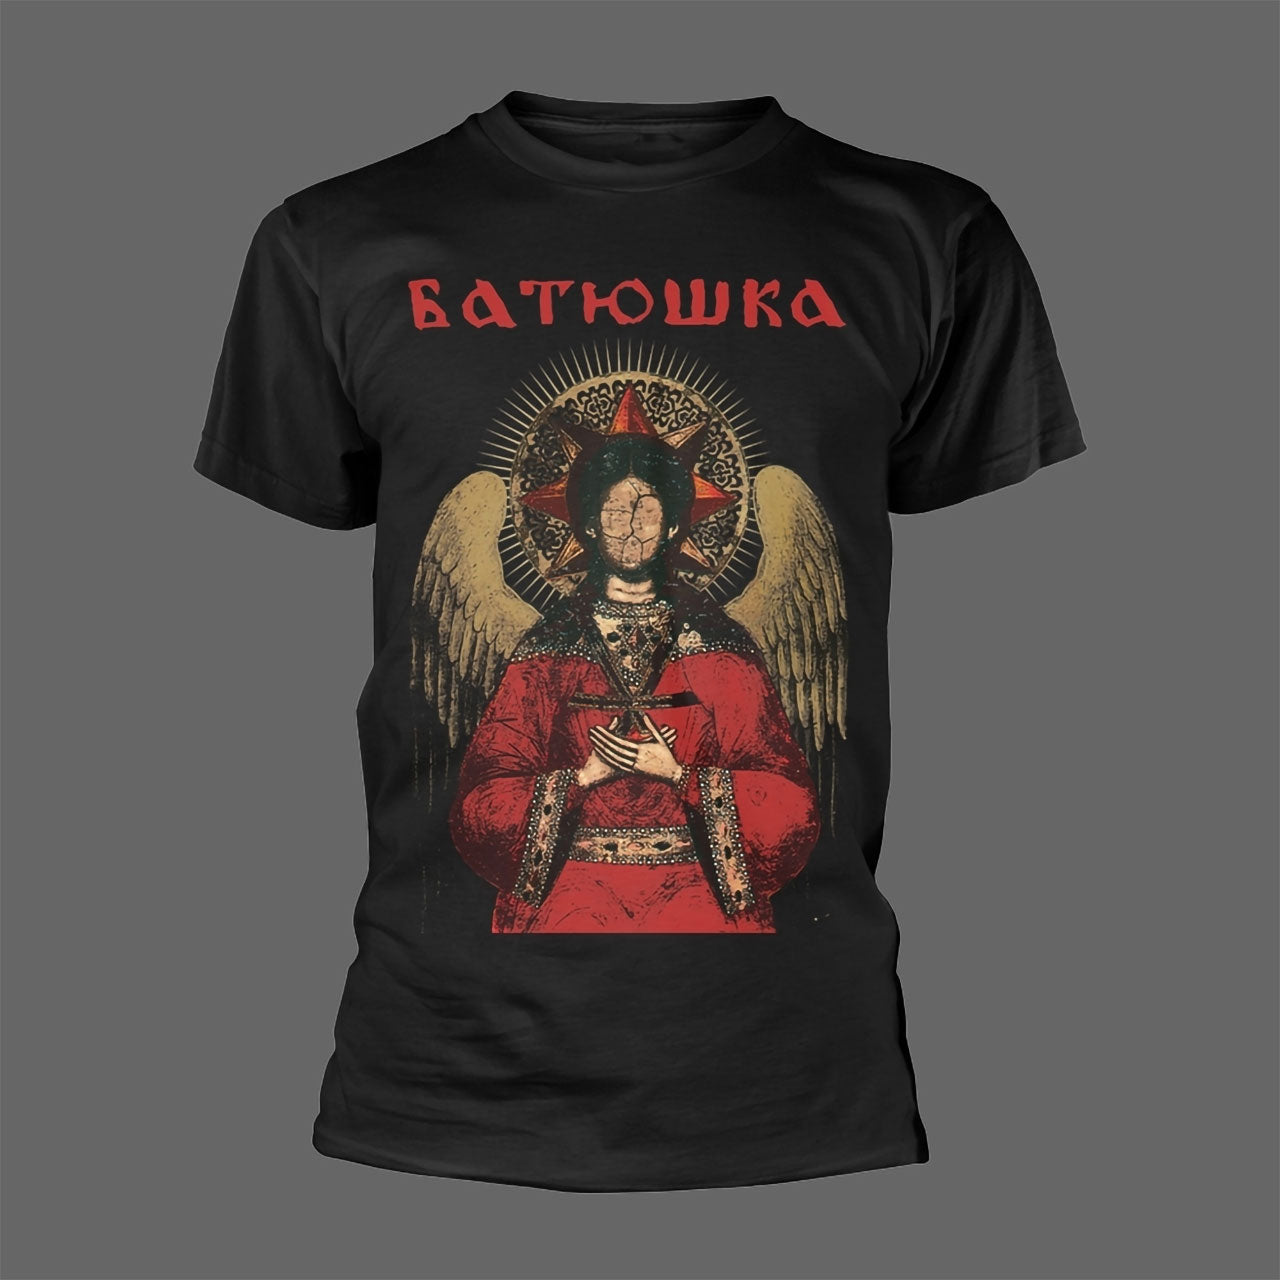 Batushka - Premudrost (Премудрость) (T-Shirt)